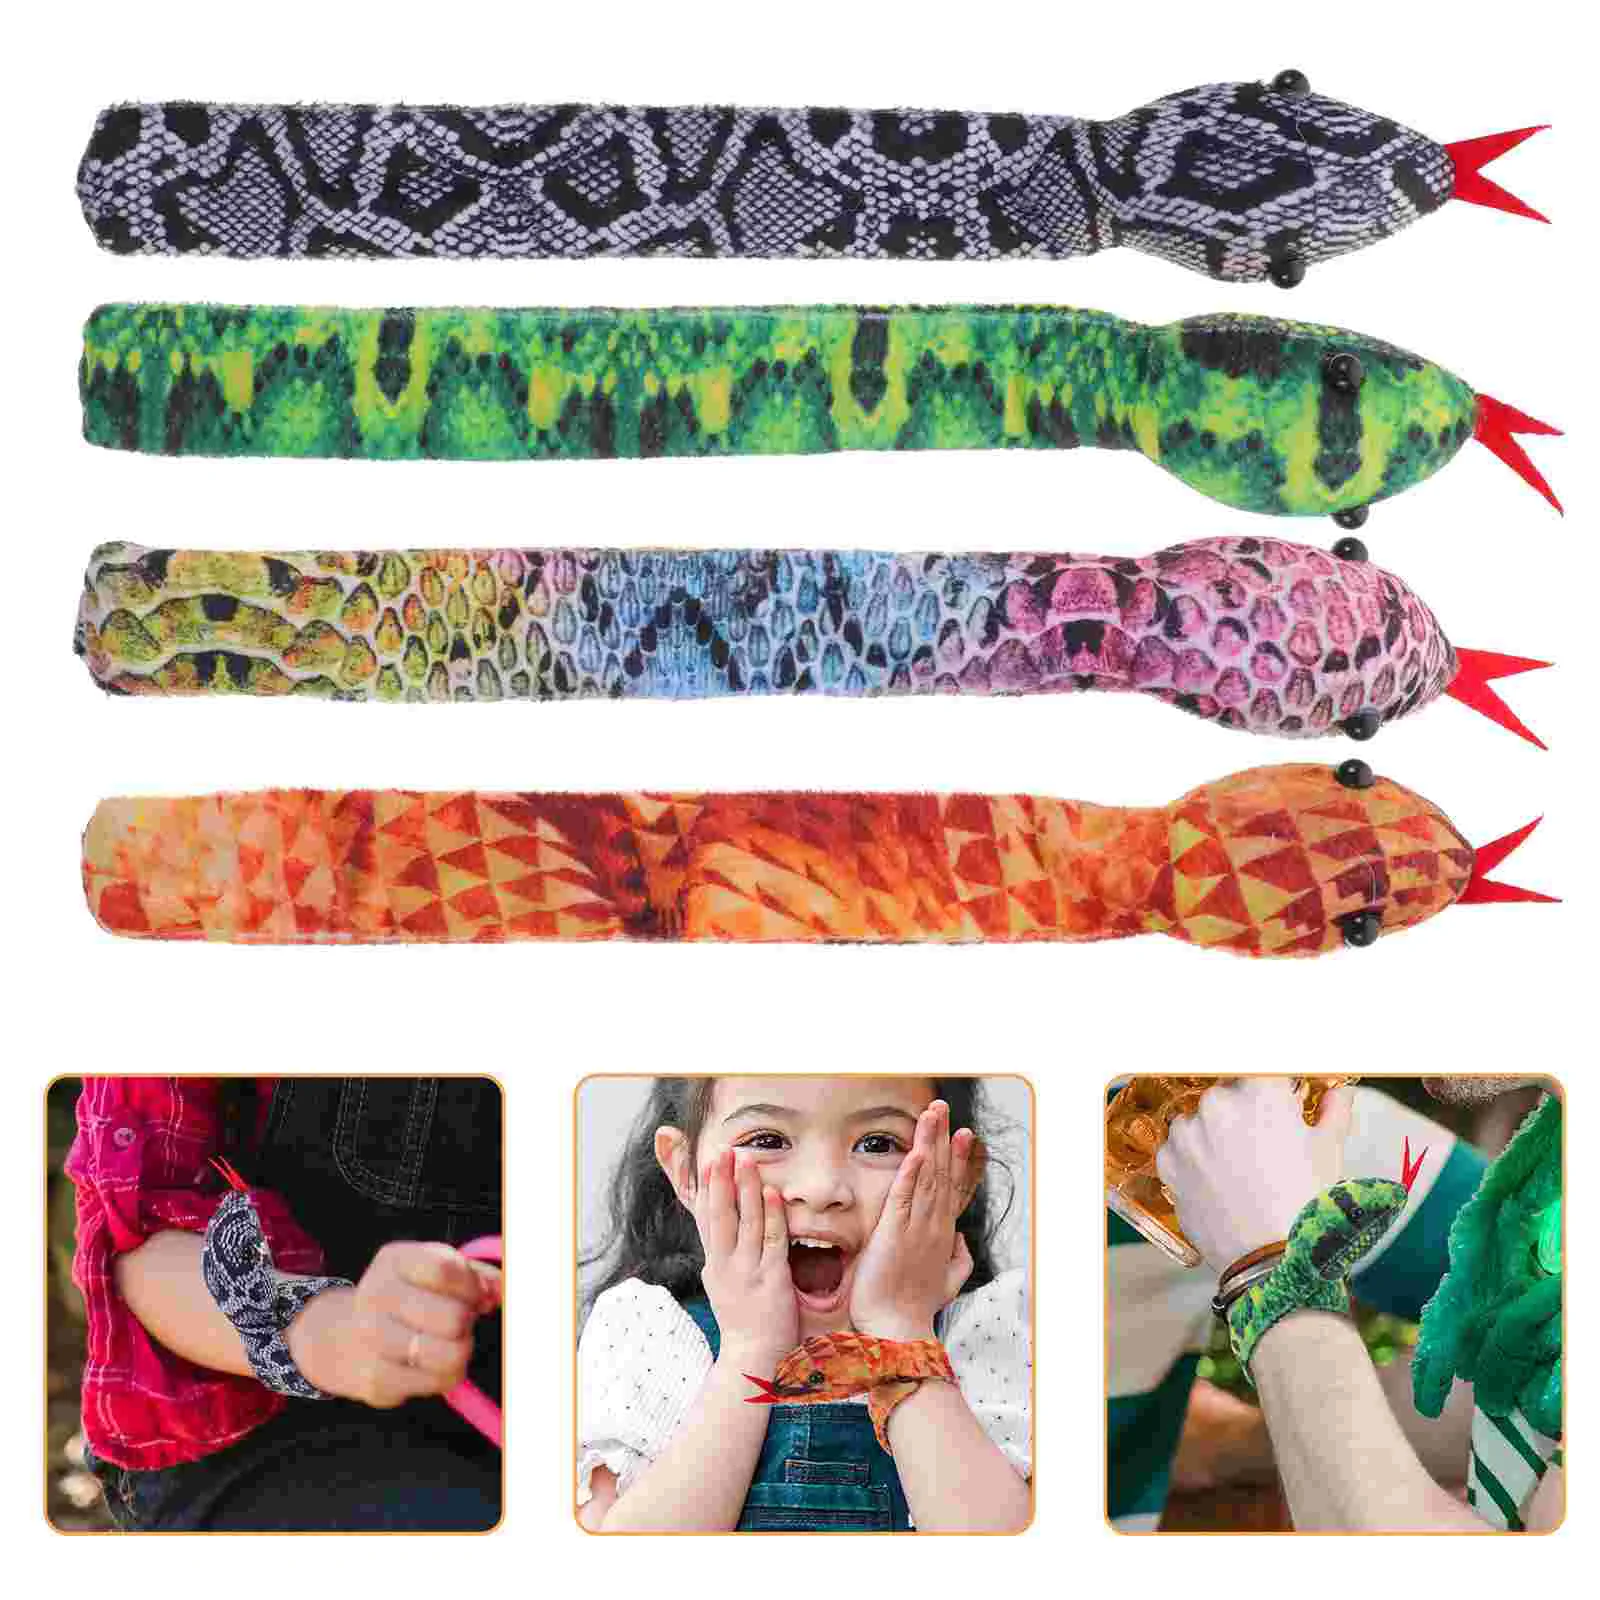 

Snake Ring Slap Bracelets Kids Toys Animal Snap Stuffed Animals Girls Snakes That Look Real Supplies Baby Plush